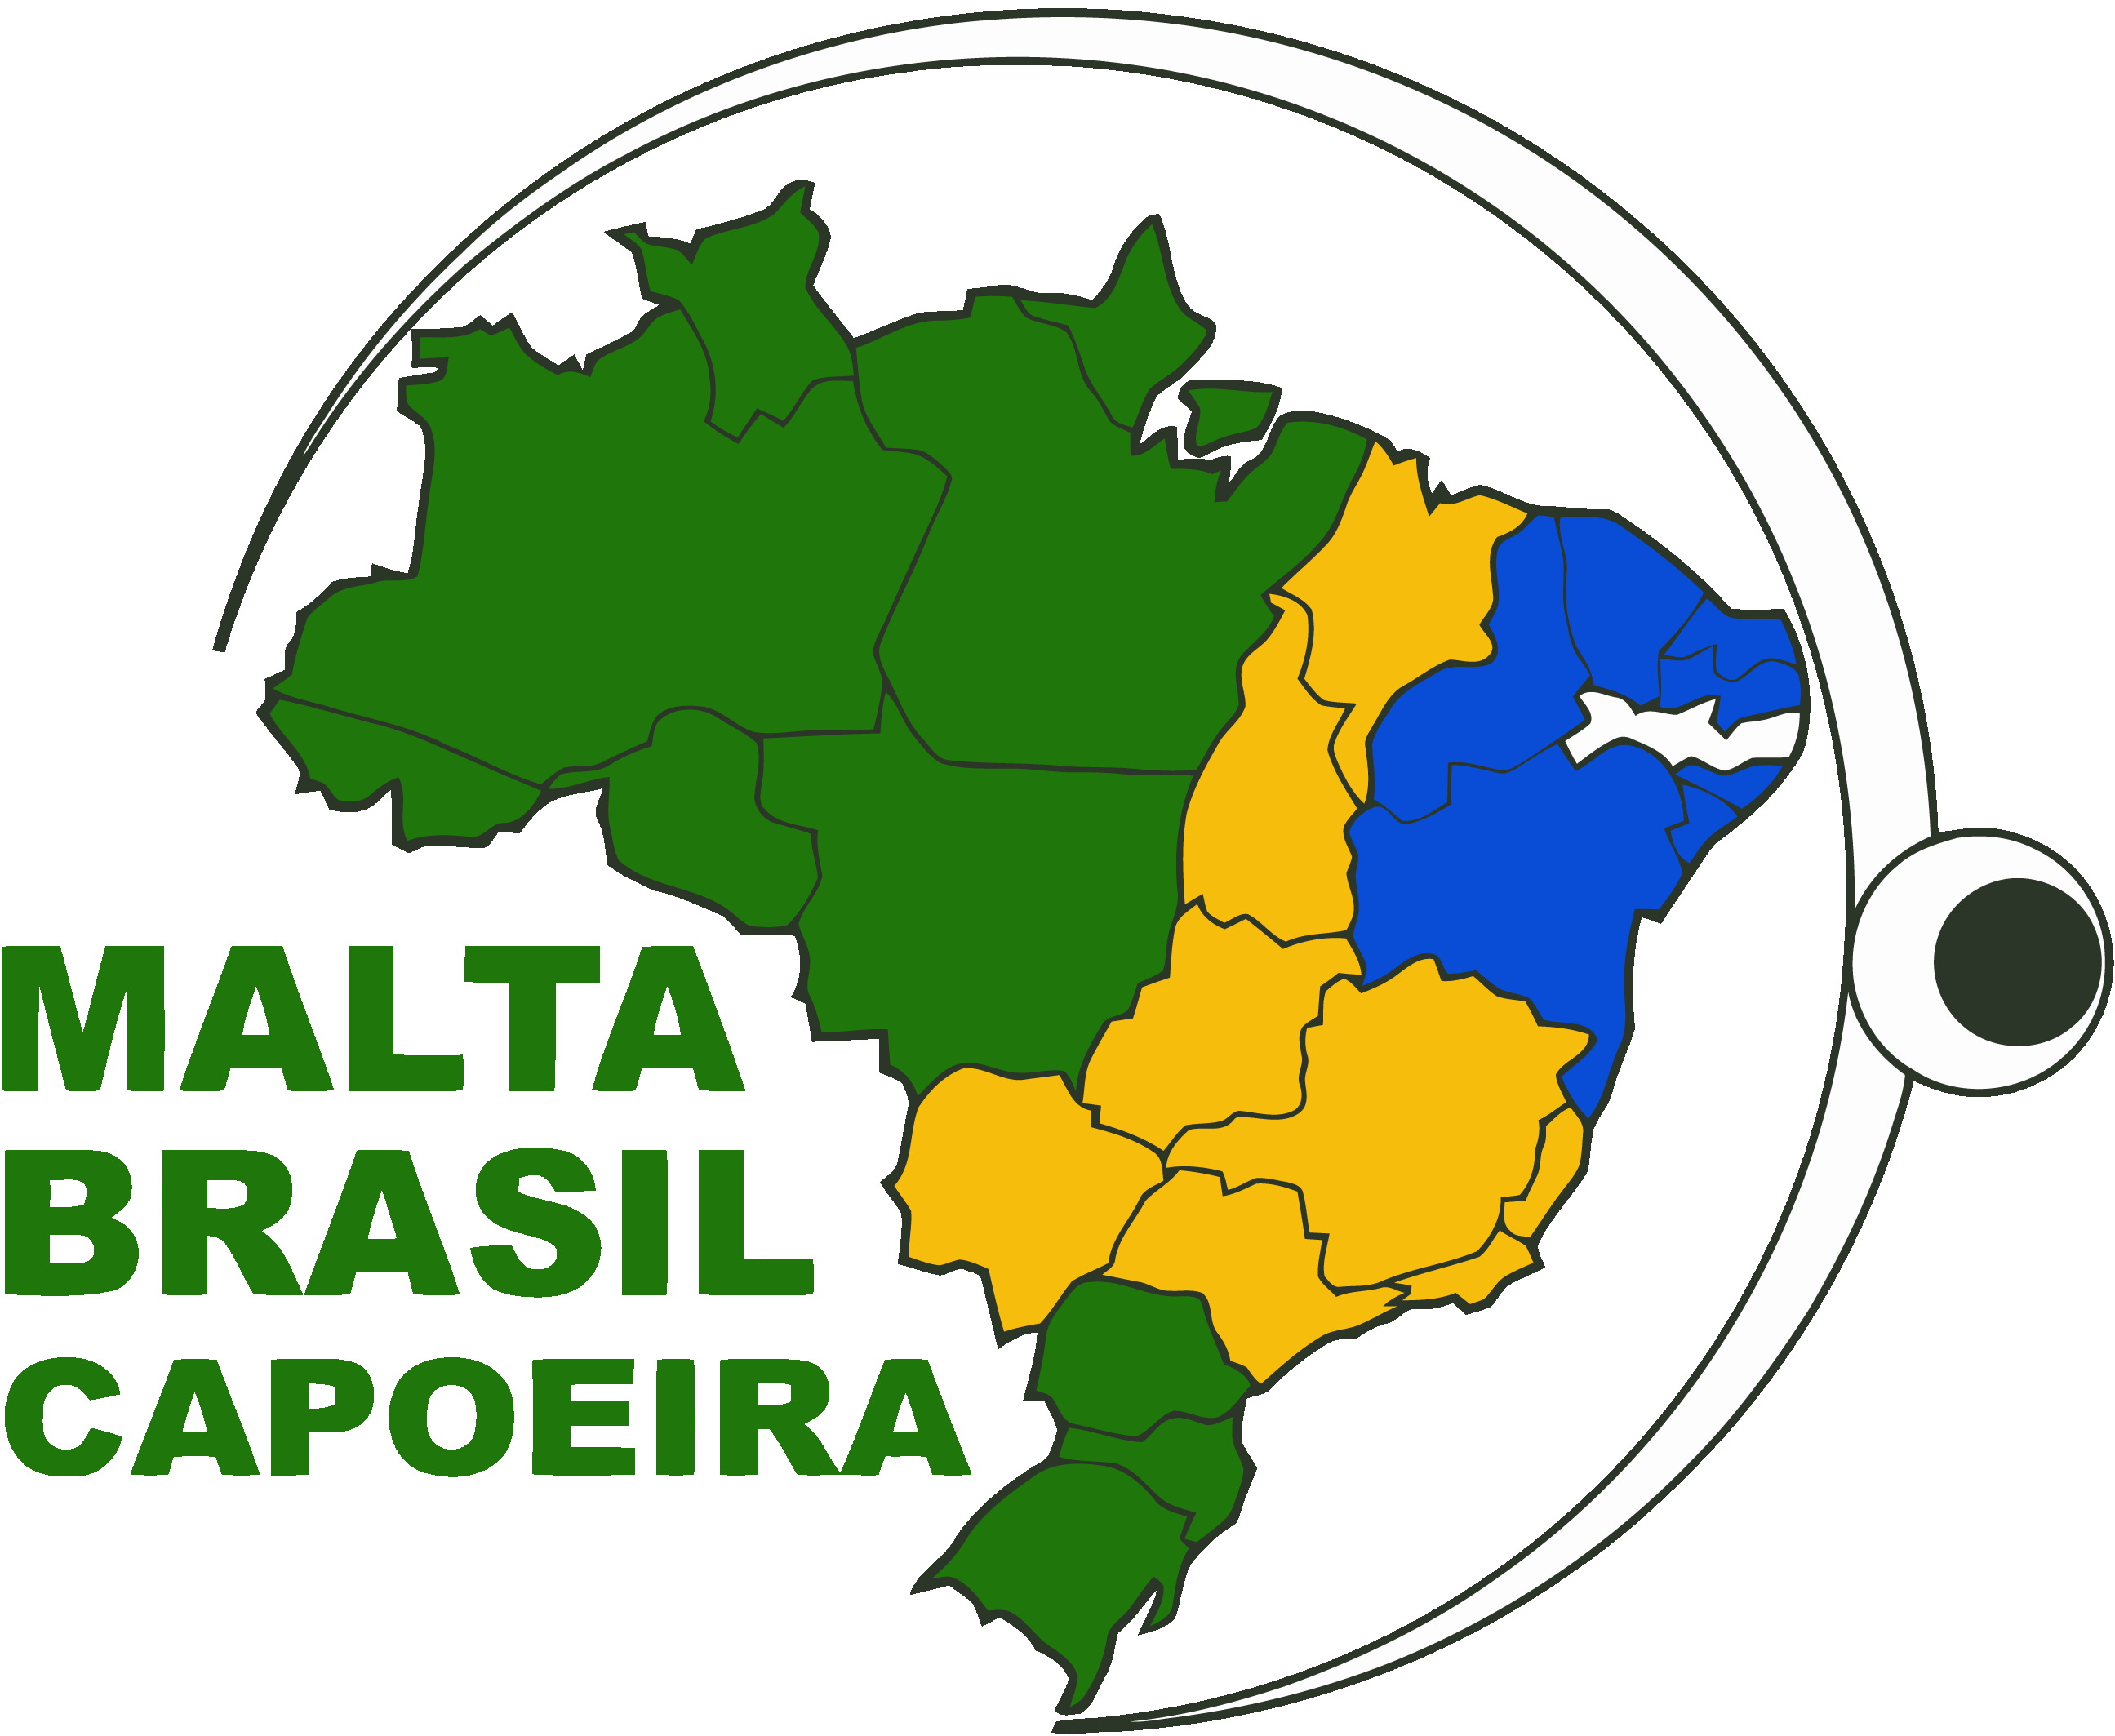 Malta Brasil Capoeira Logo